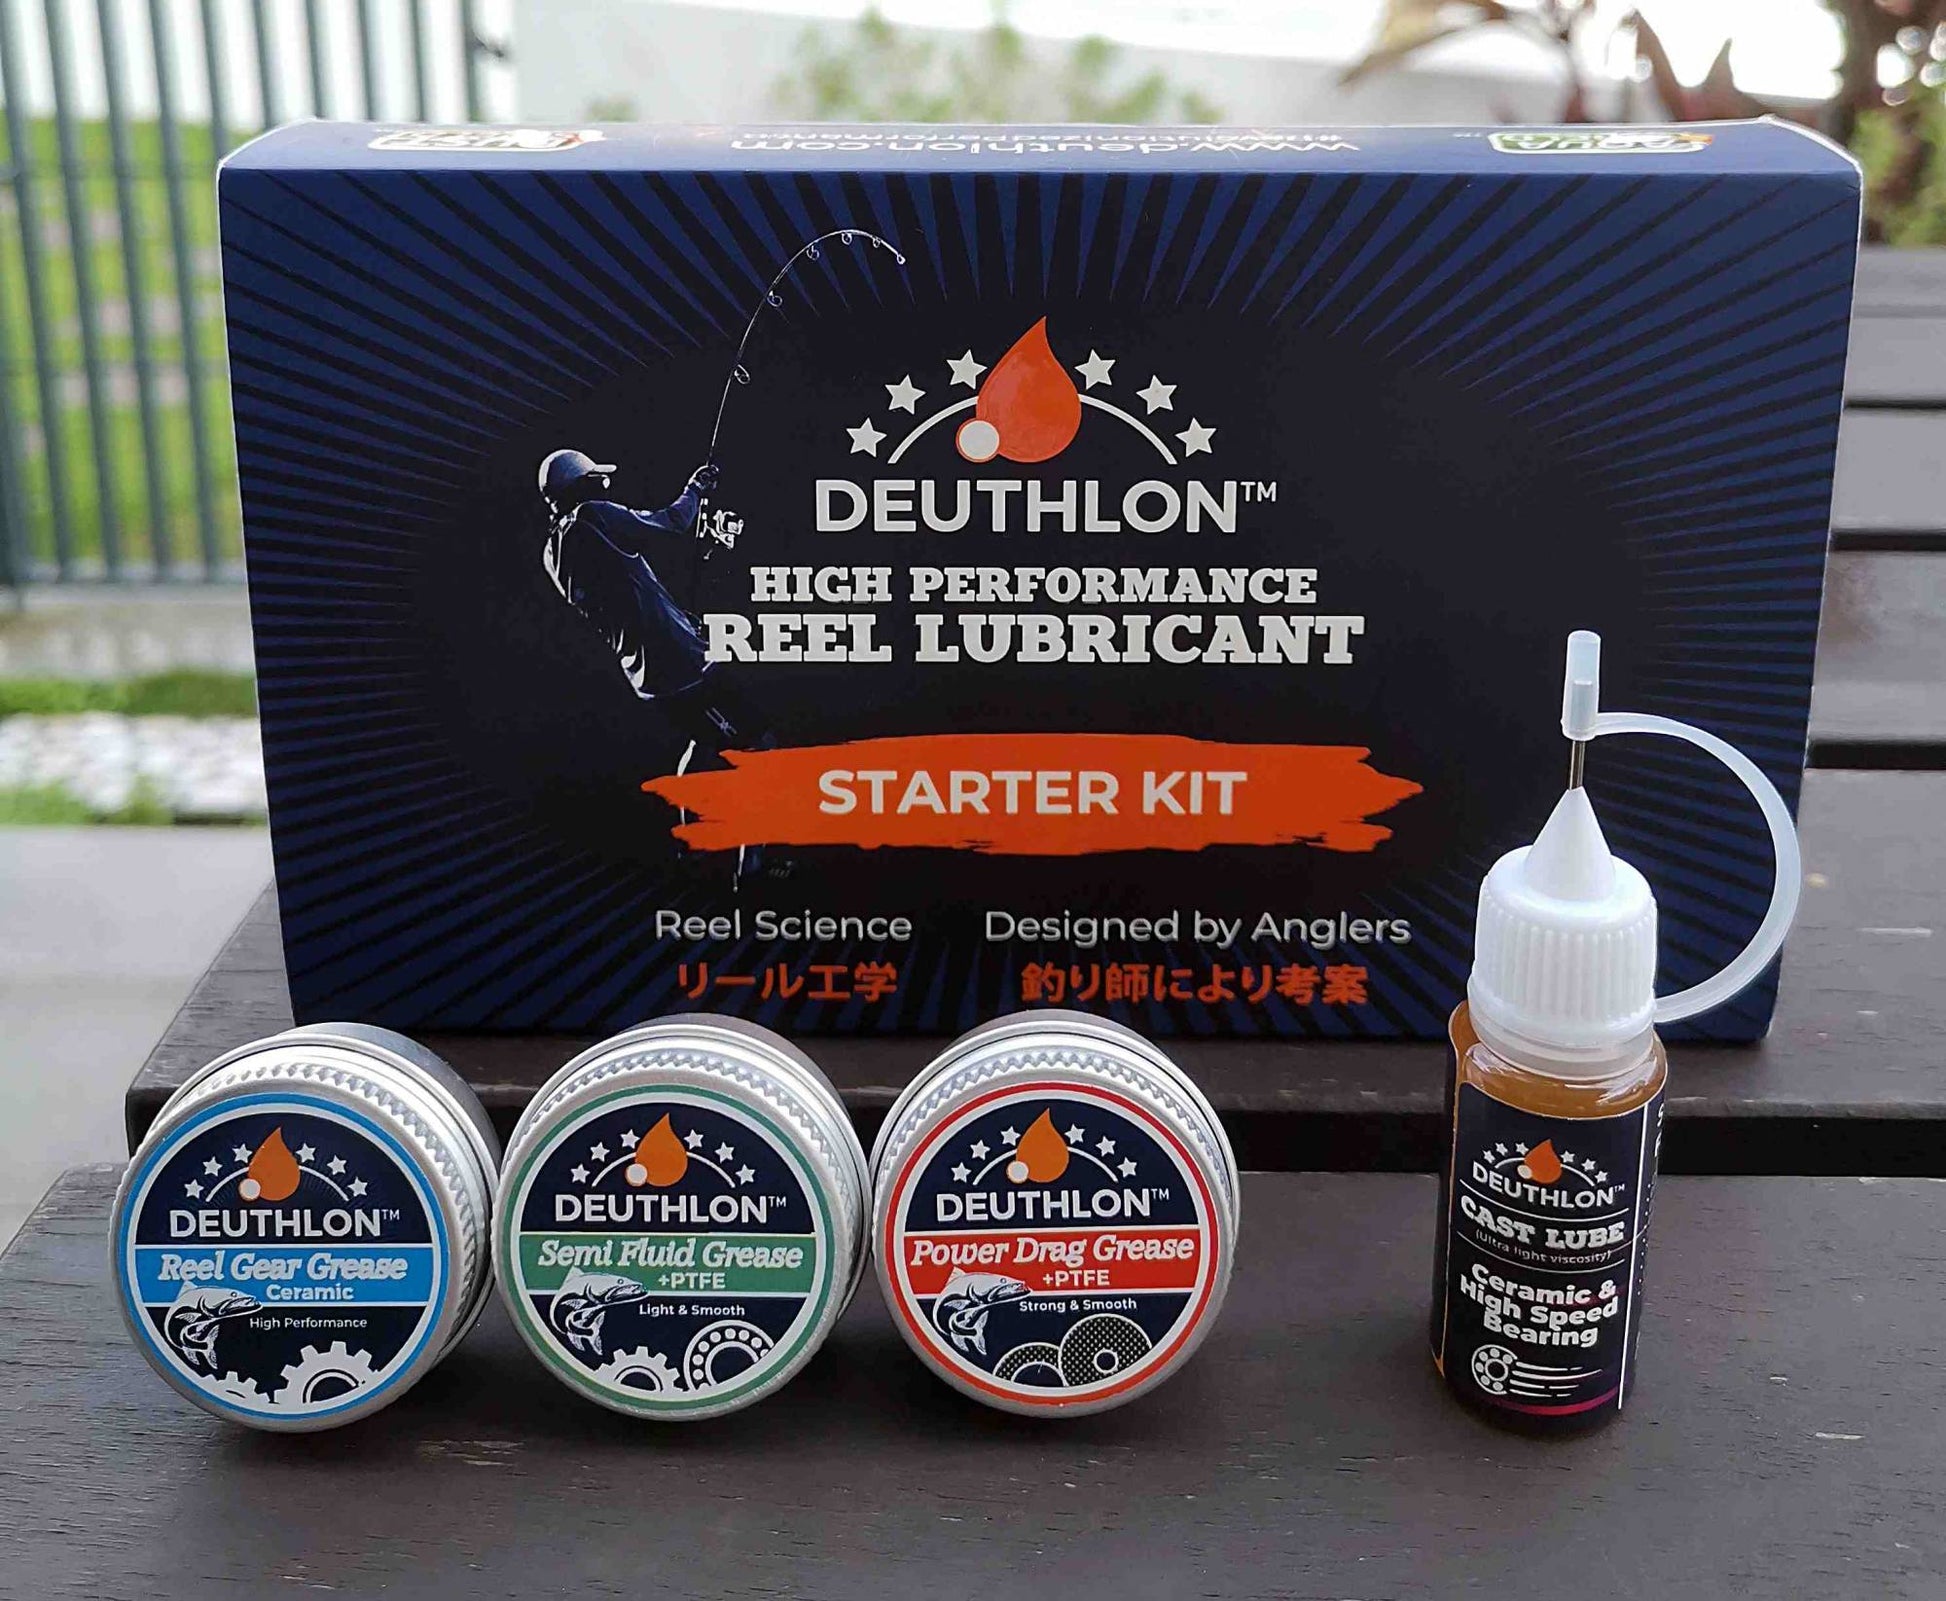 Be in to WIN 1 of 25 Deuthlon Reel Maintenance Starter Kits! - The